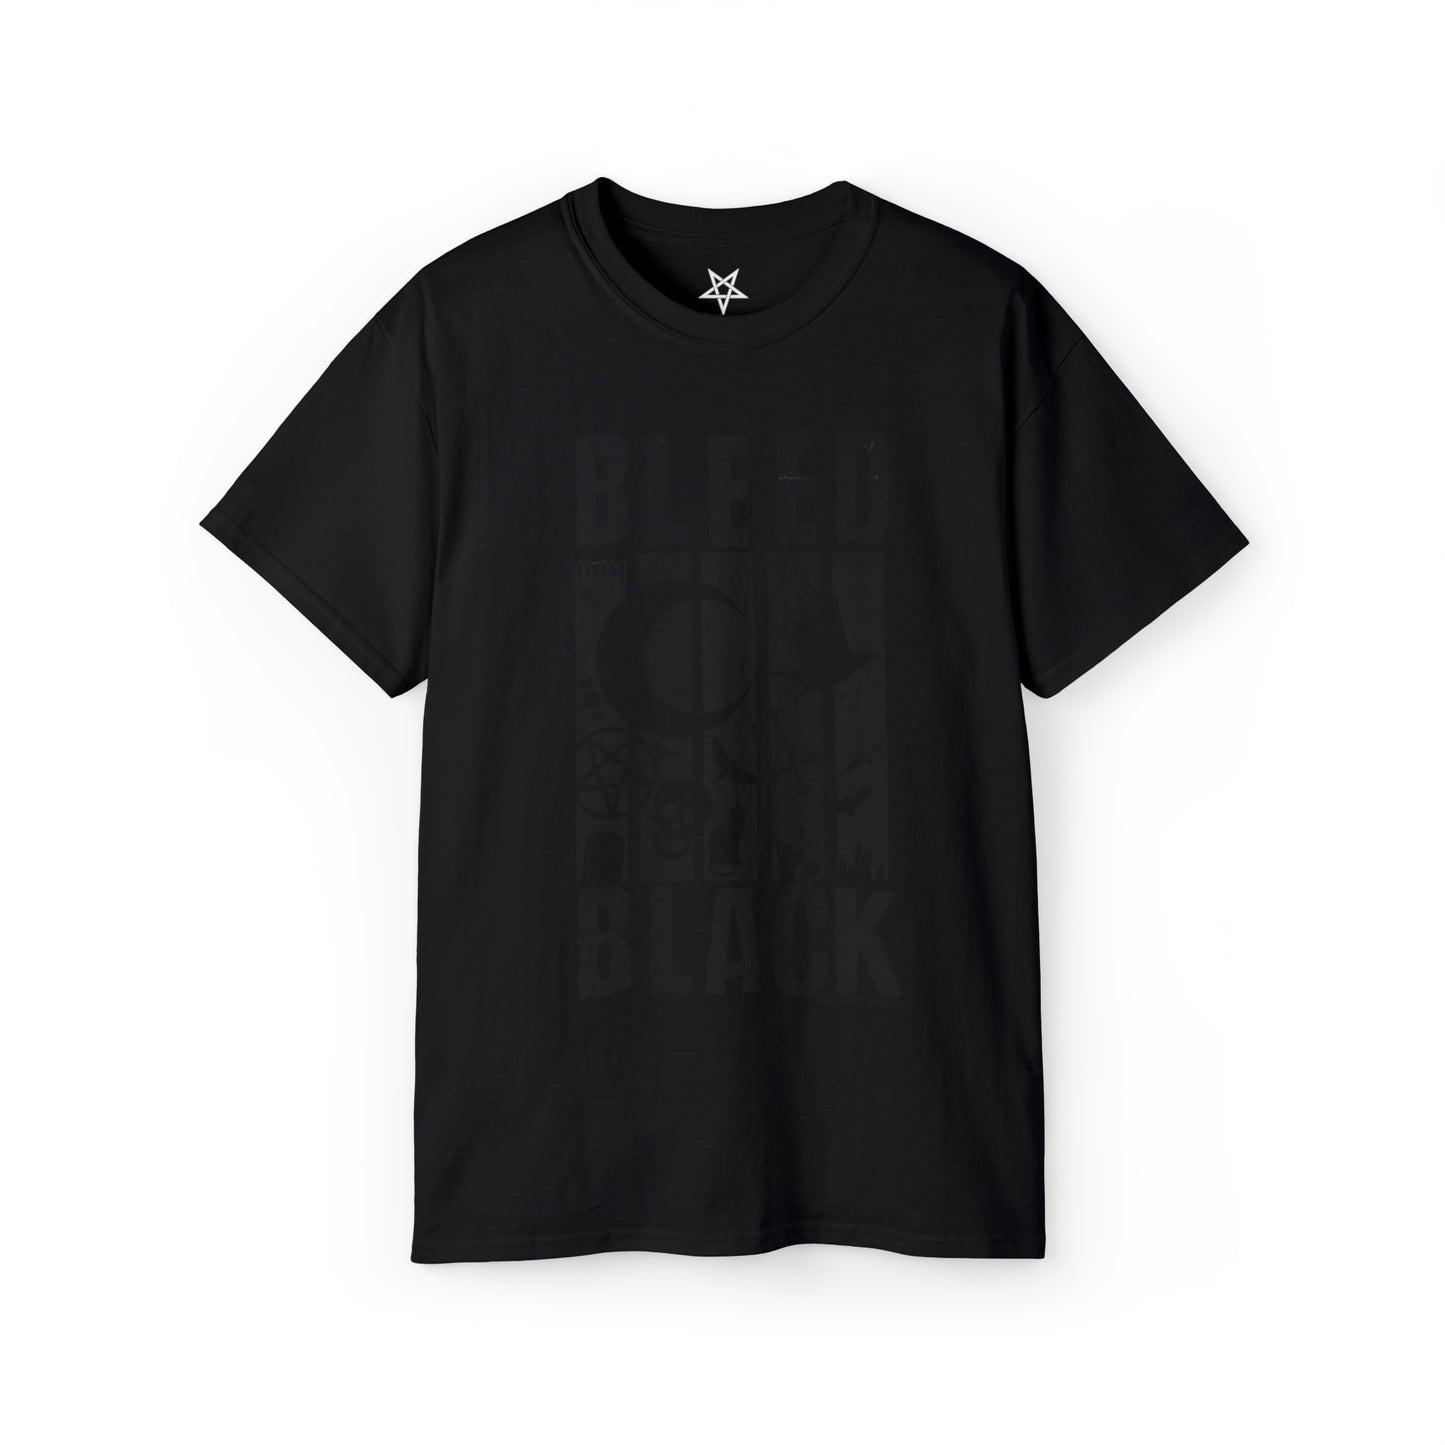 Bleed Black Gothic Symbols T-Shirt by Hellhound Clothing - Embrace the Shadows